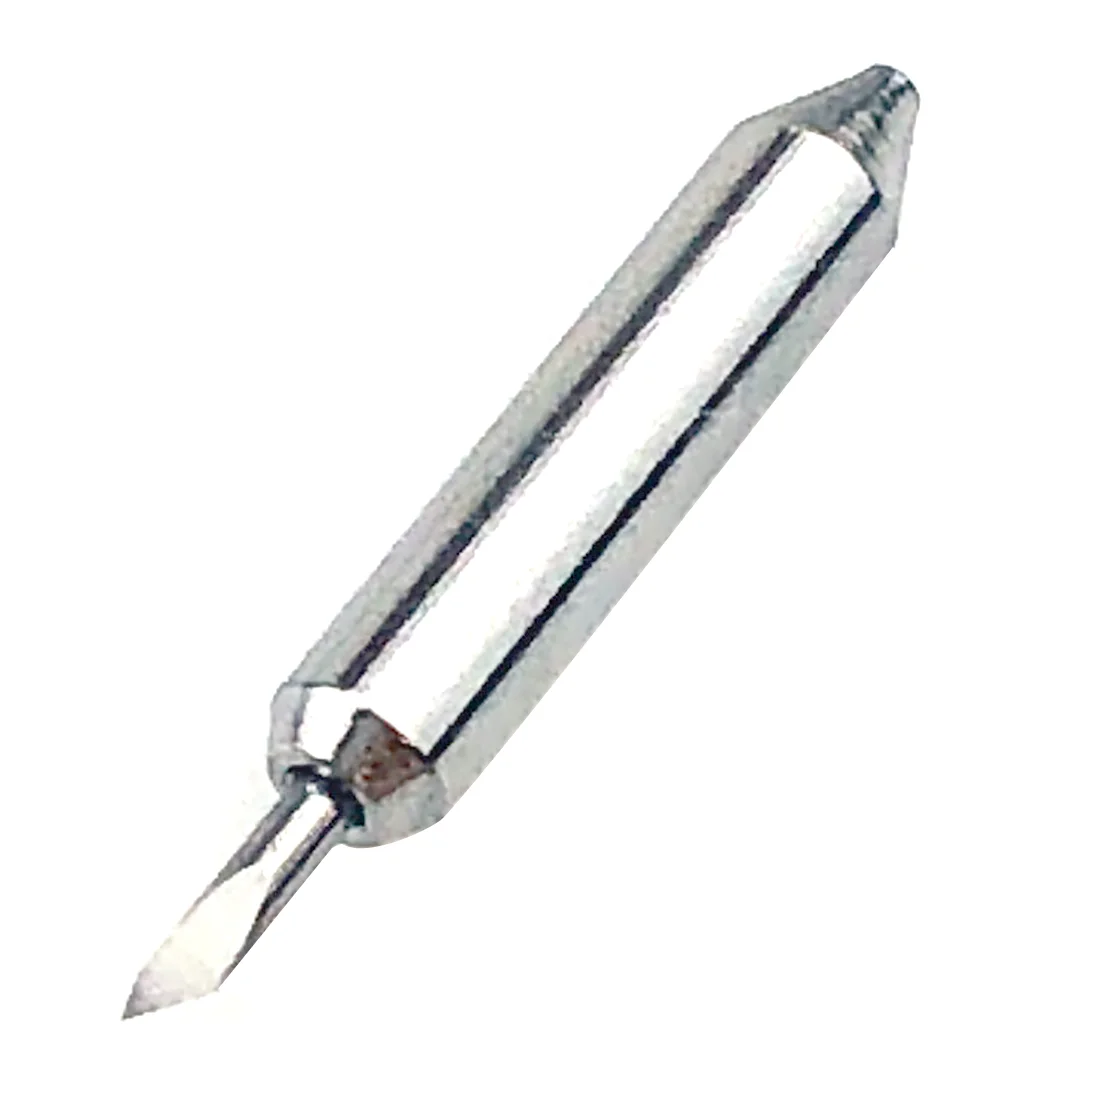 10Pcs High Precision Replacement Blade For Cricut Joy Cutting